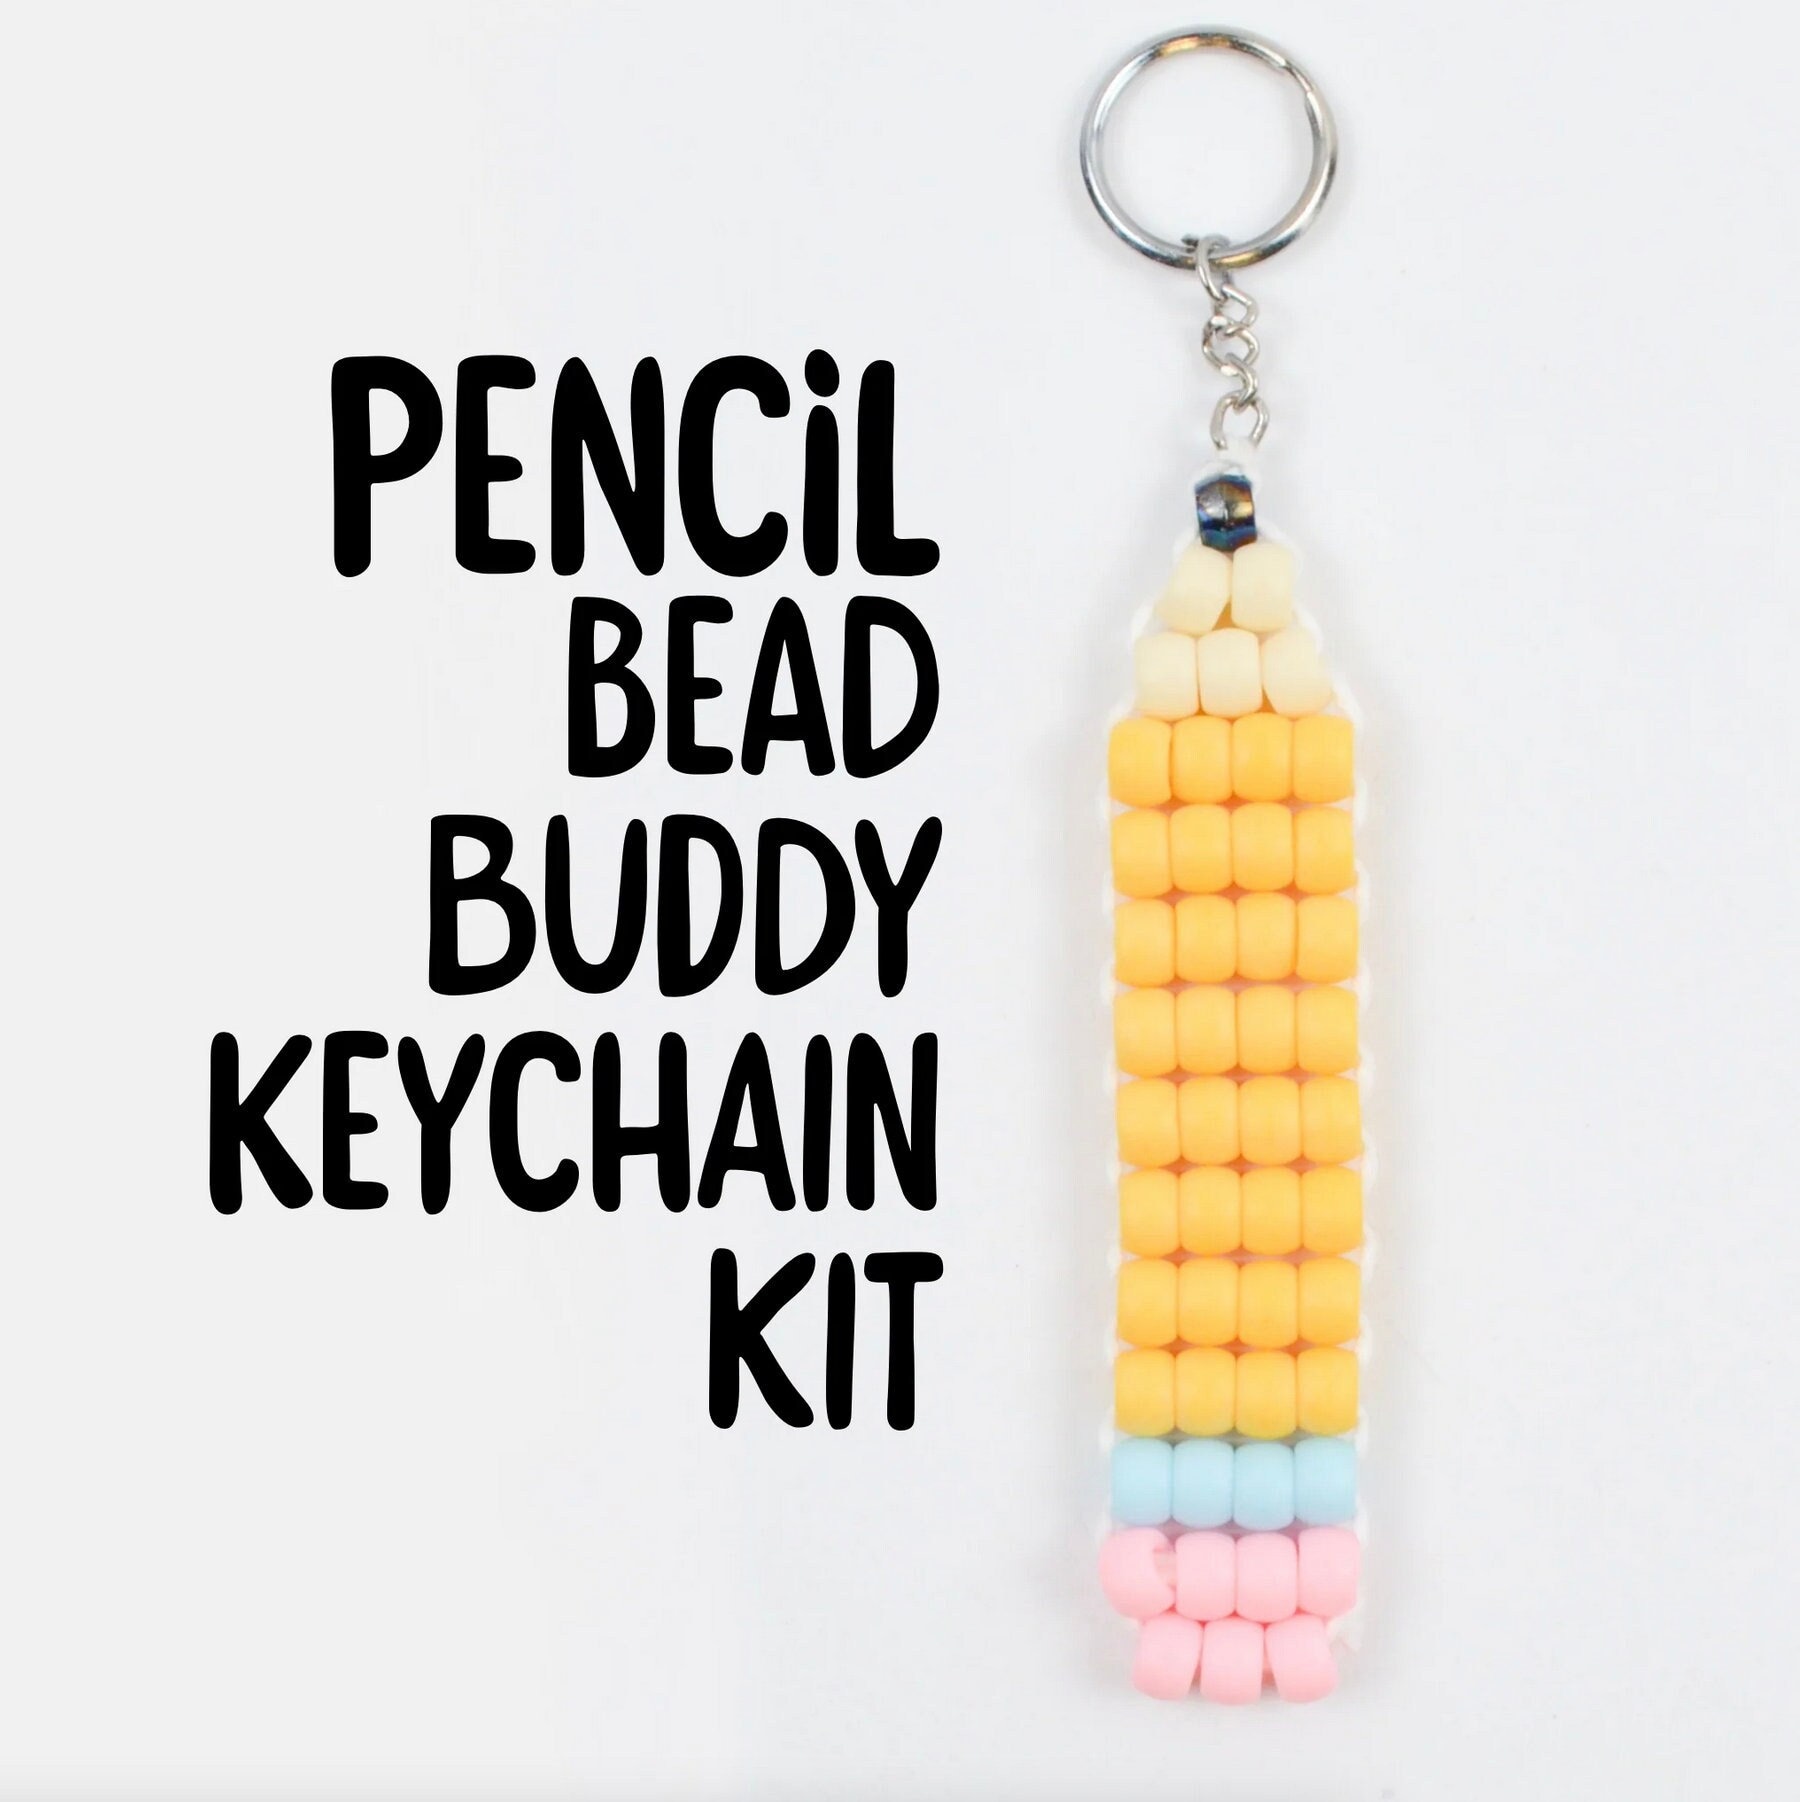 Buy Pencil Bead Buddy Pony Bead Keychain Kit Online in India 